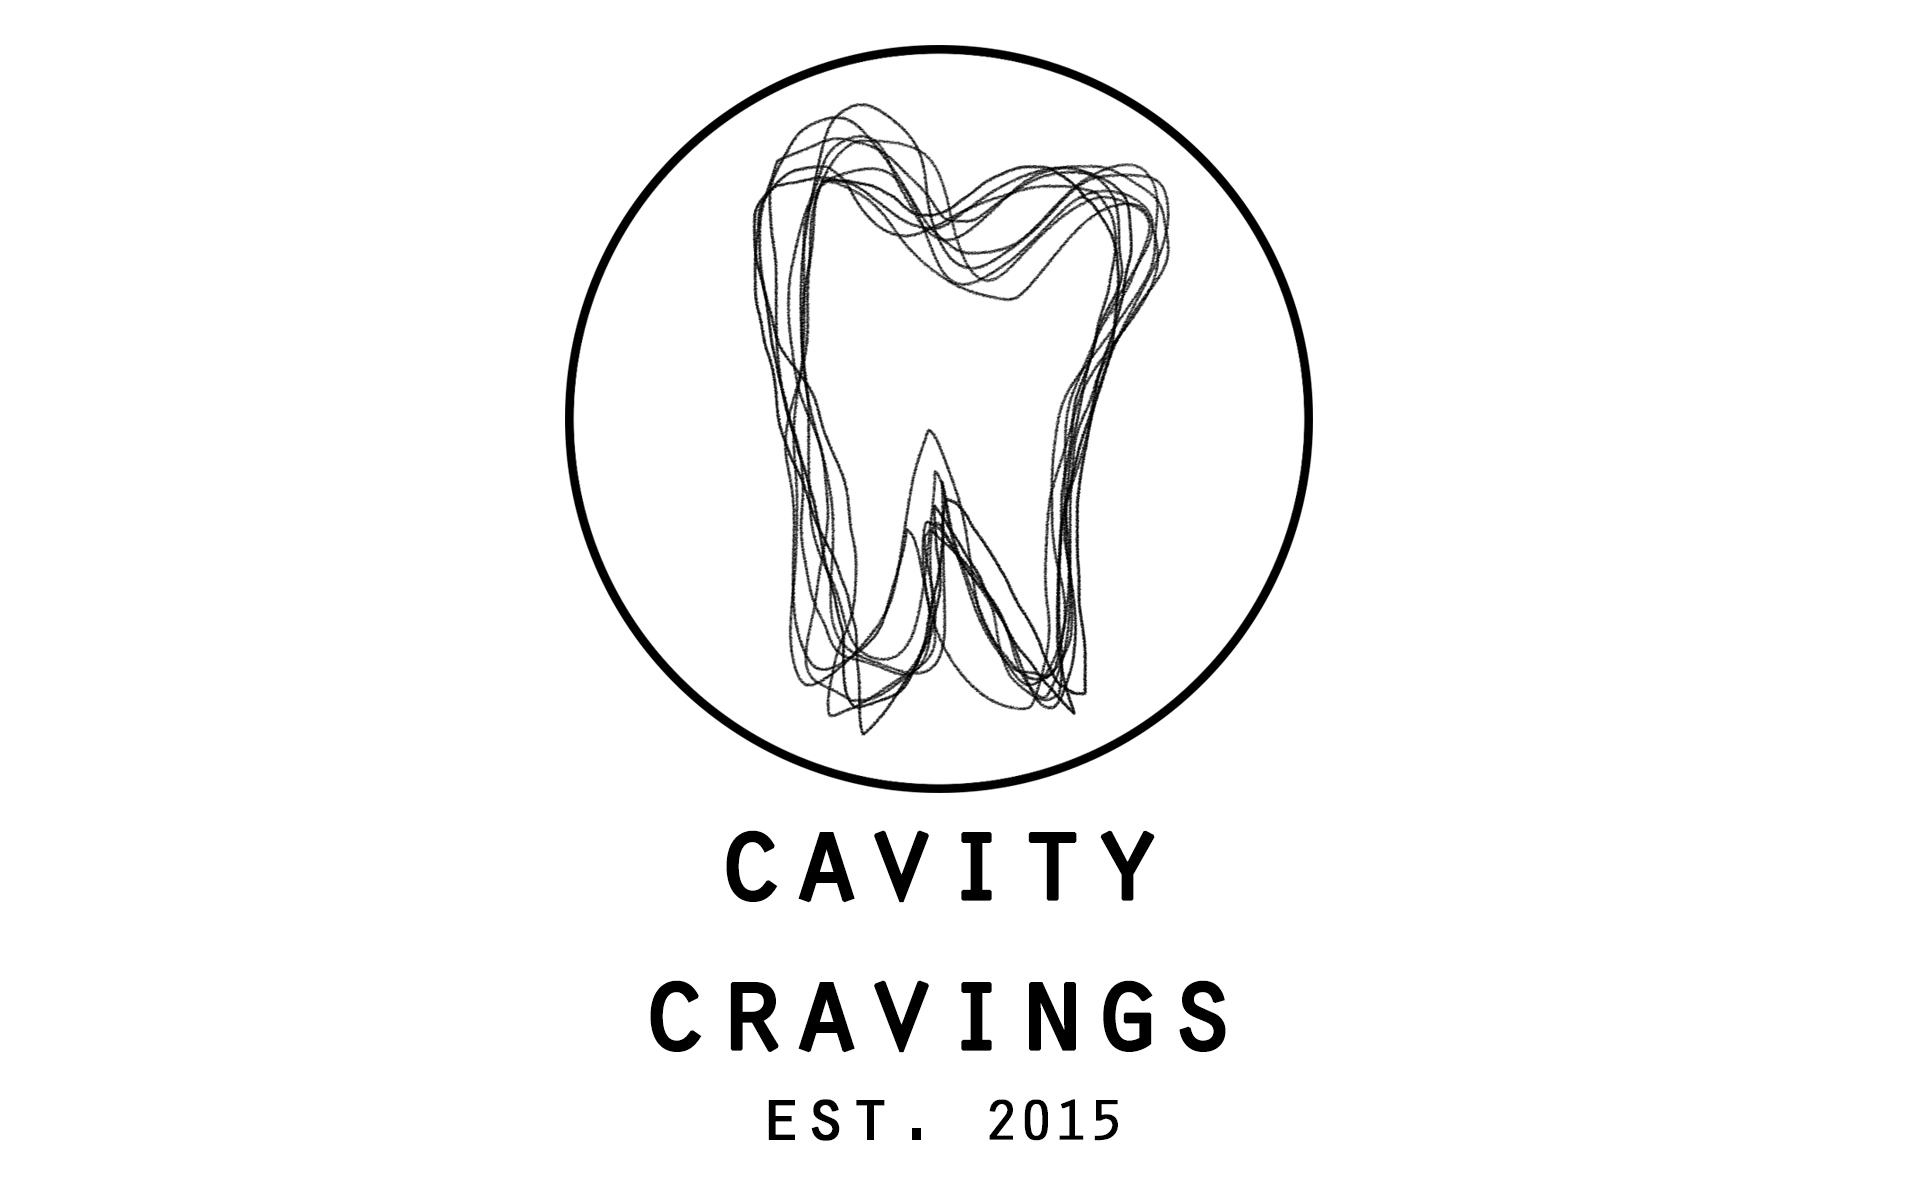 Cavitycravings